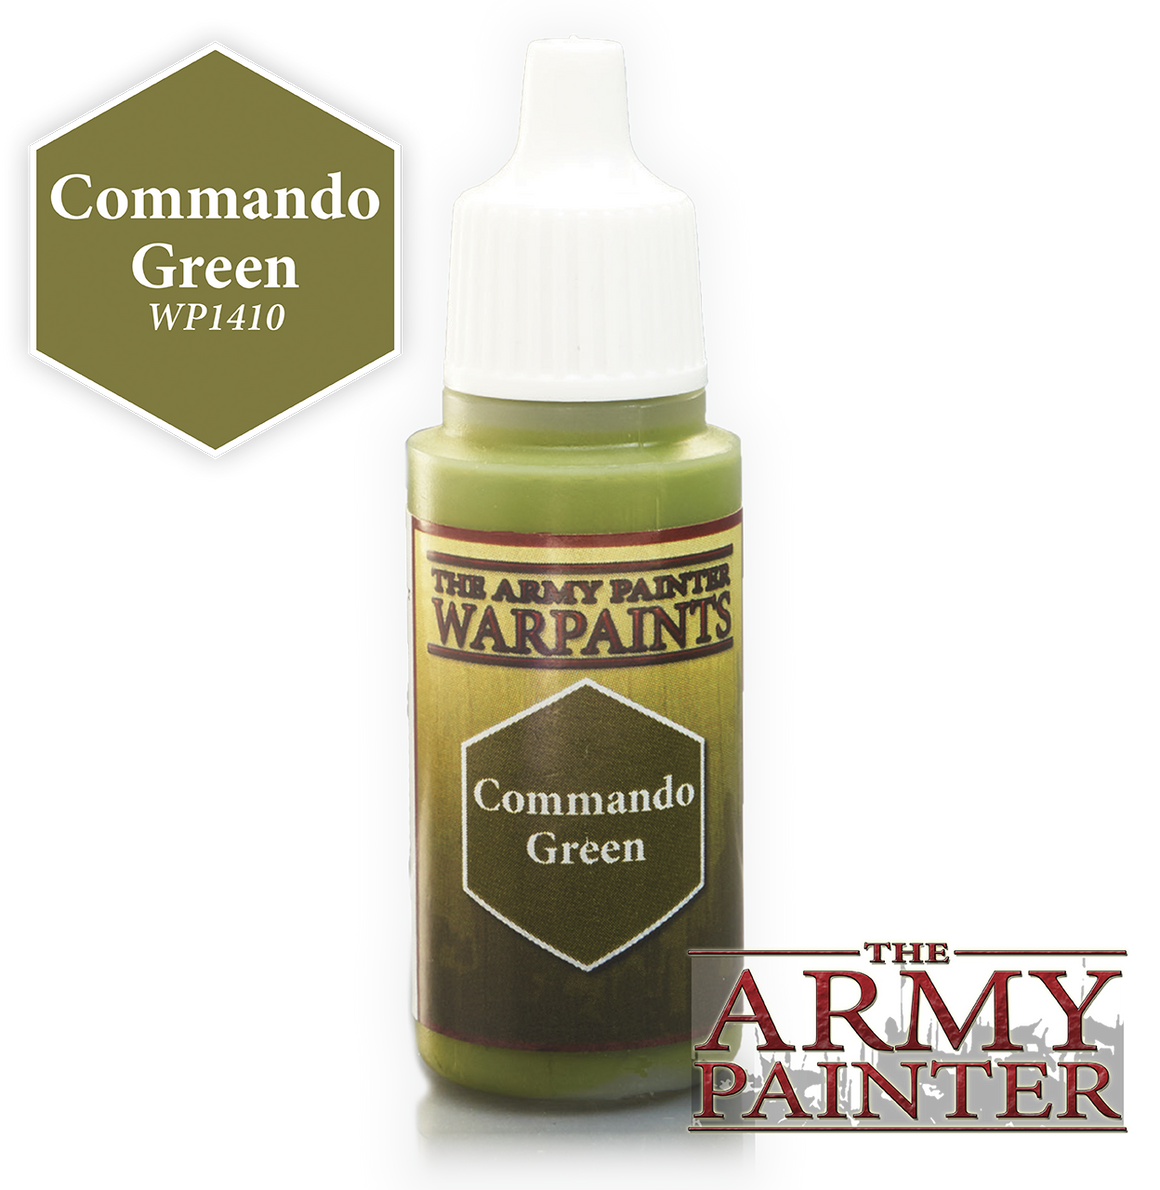 Army Painter Acrylic Warpaint - Commando Green